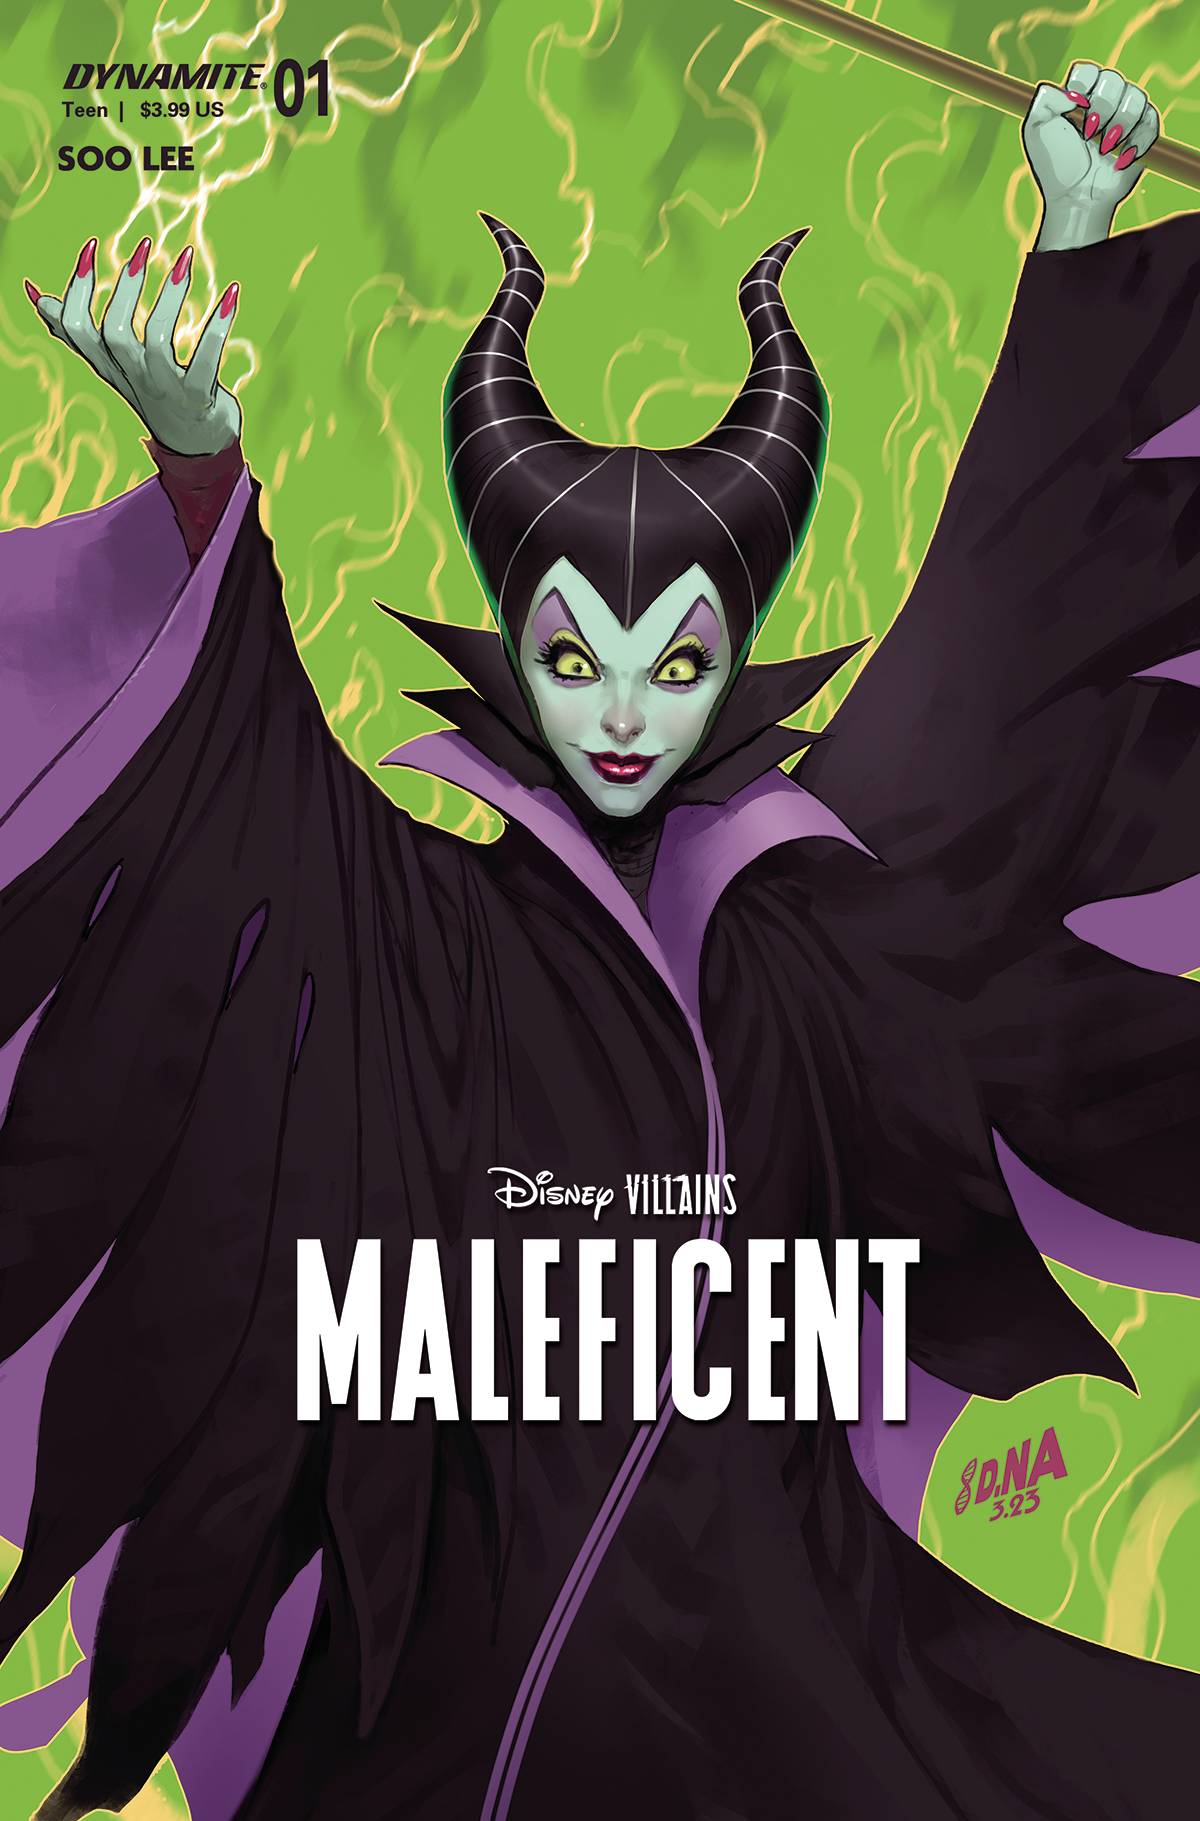 Disney Villains Maleficent No. 1 Ivan Talavera Variants LTD 400